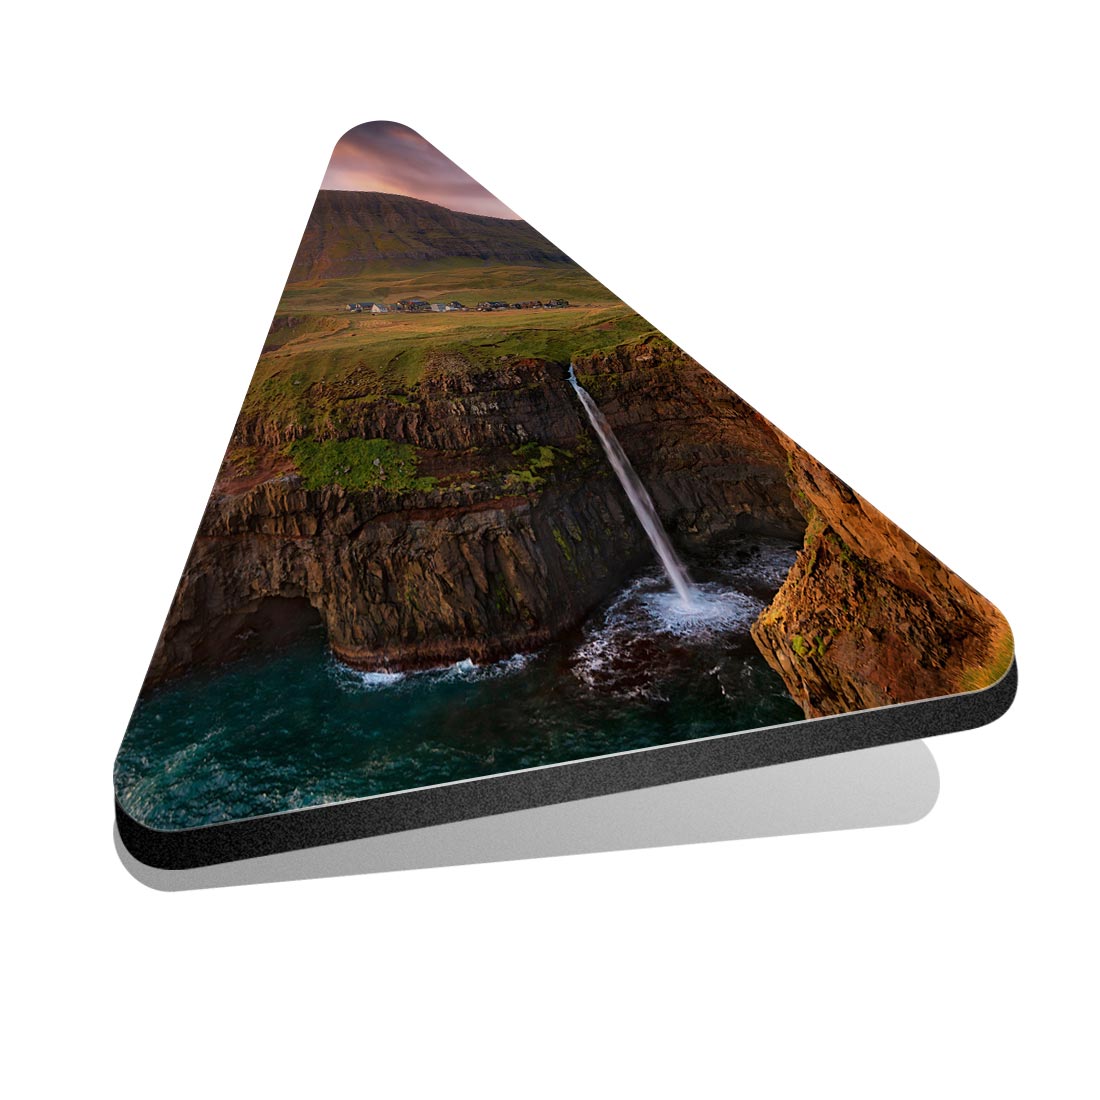 1x Triangle Fridge MDF Magnet Gasadalur Waterfall Faroe Islands #51001 - Picture 1 of 1